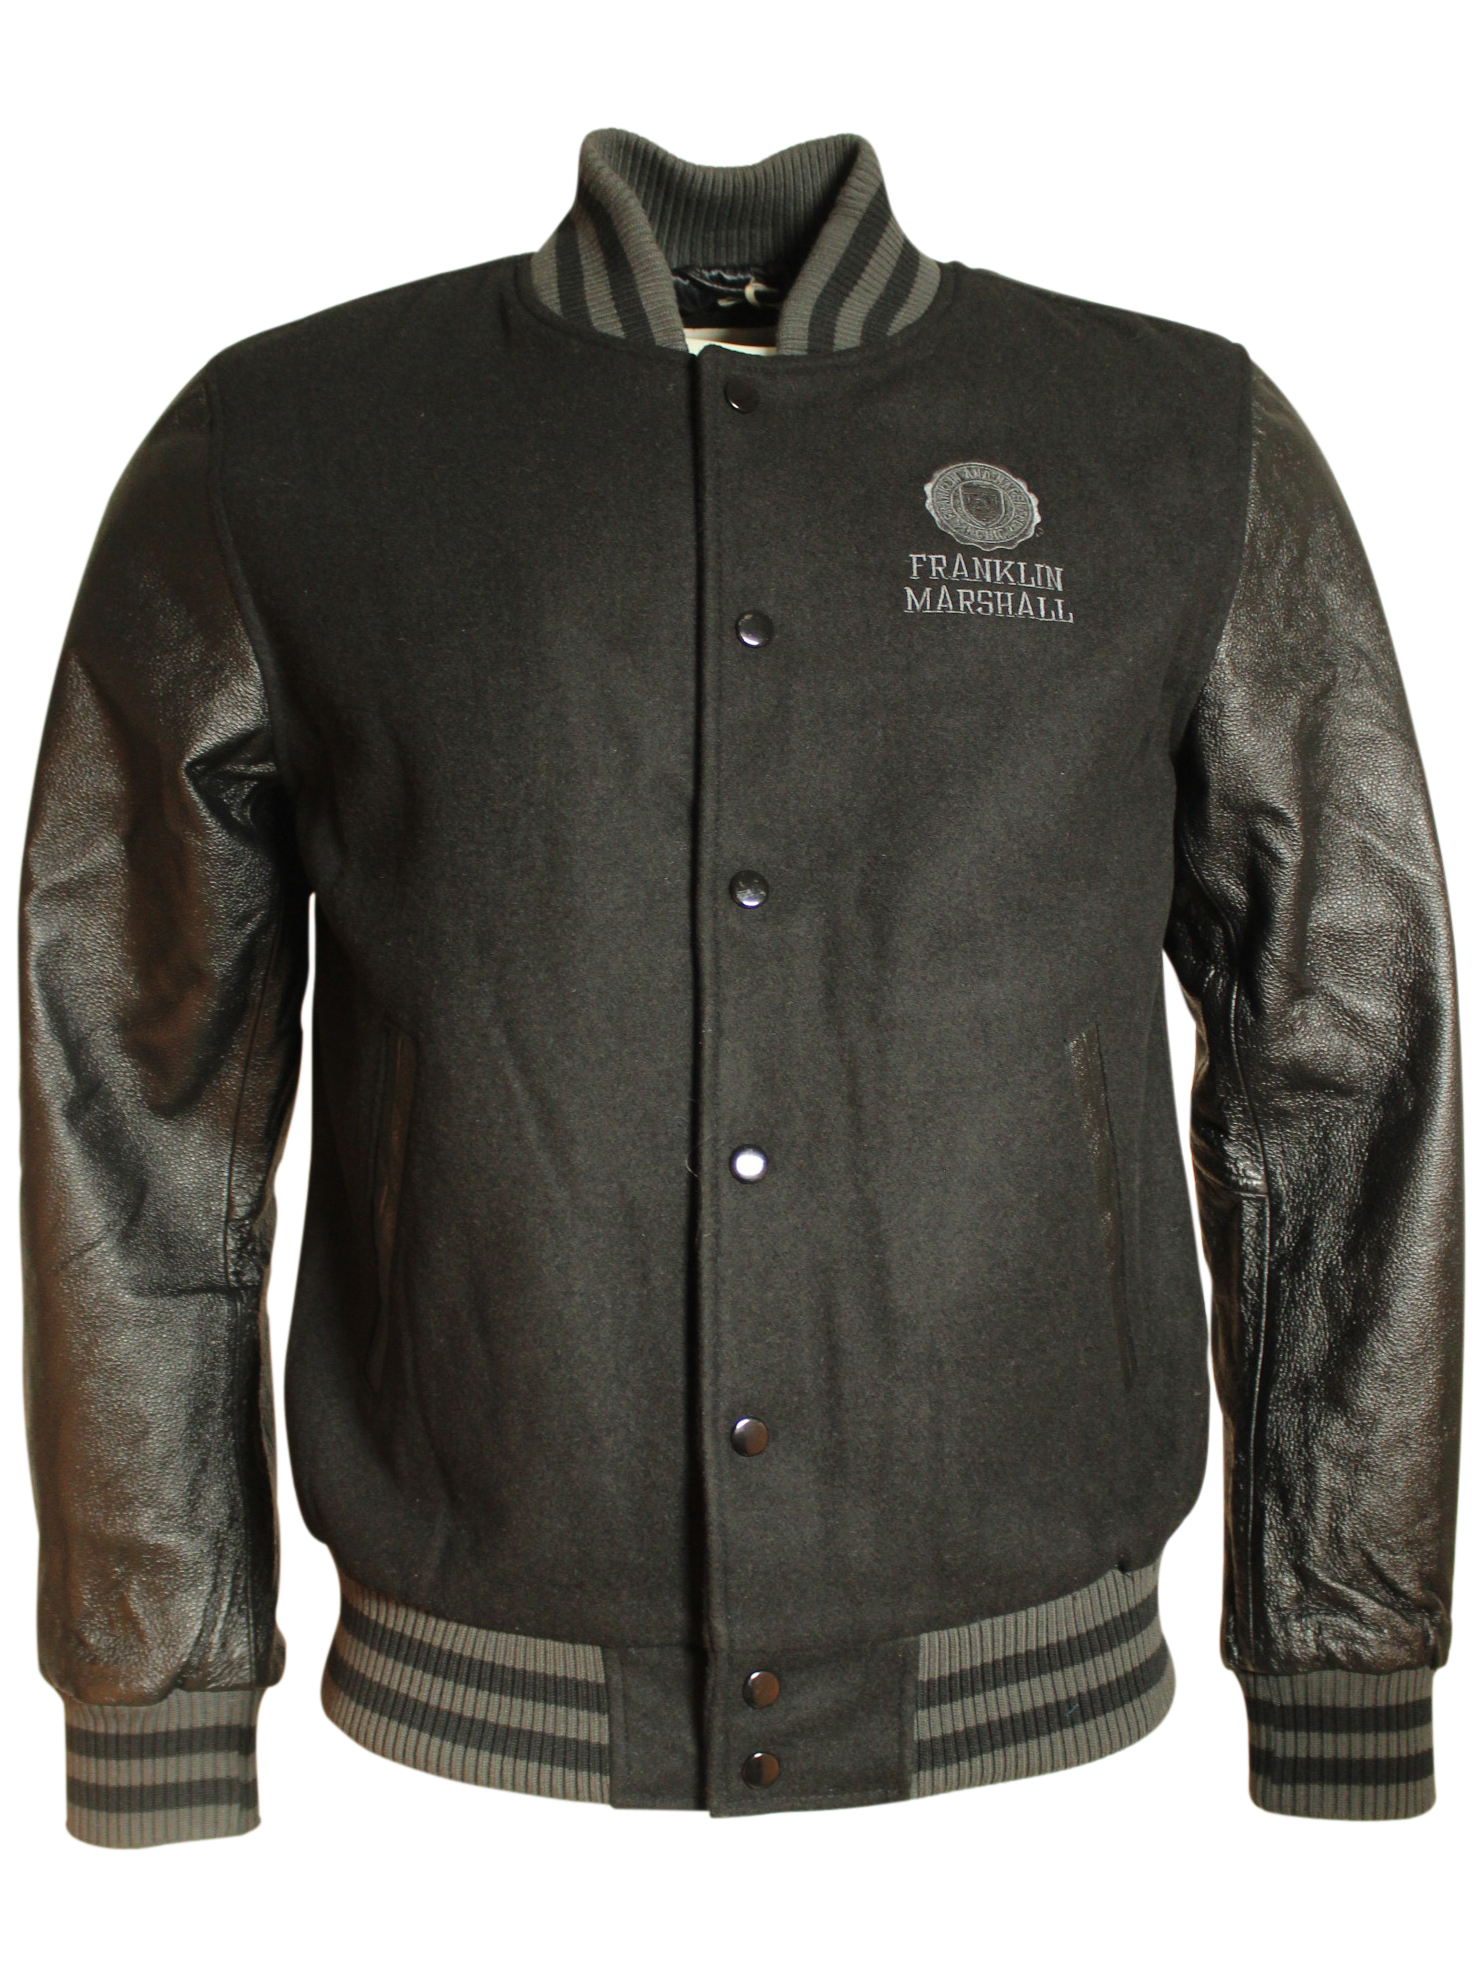 Buy Franklin & Marshall College Jacket Black